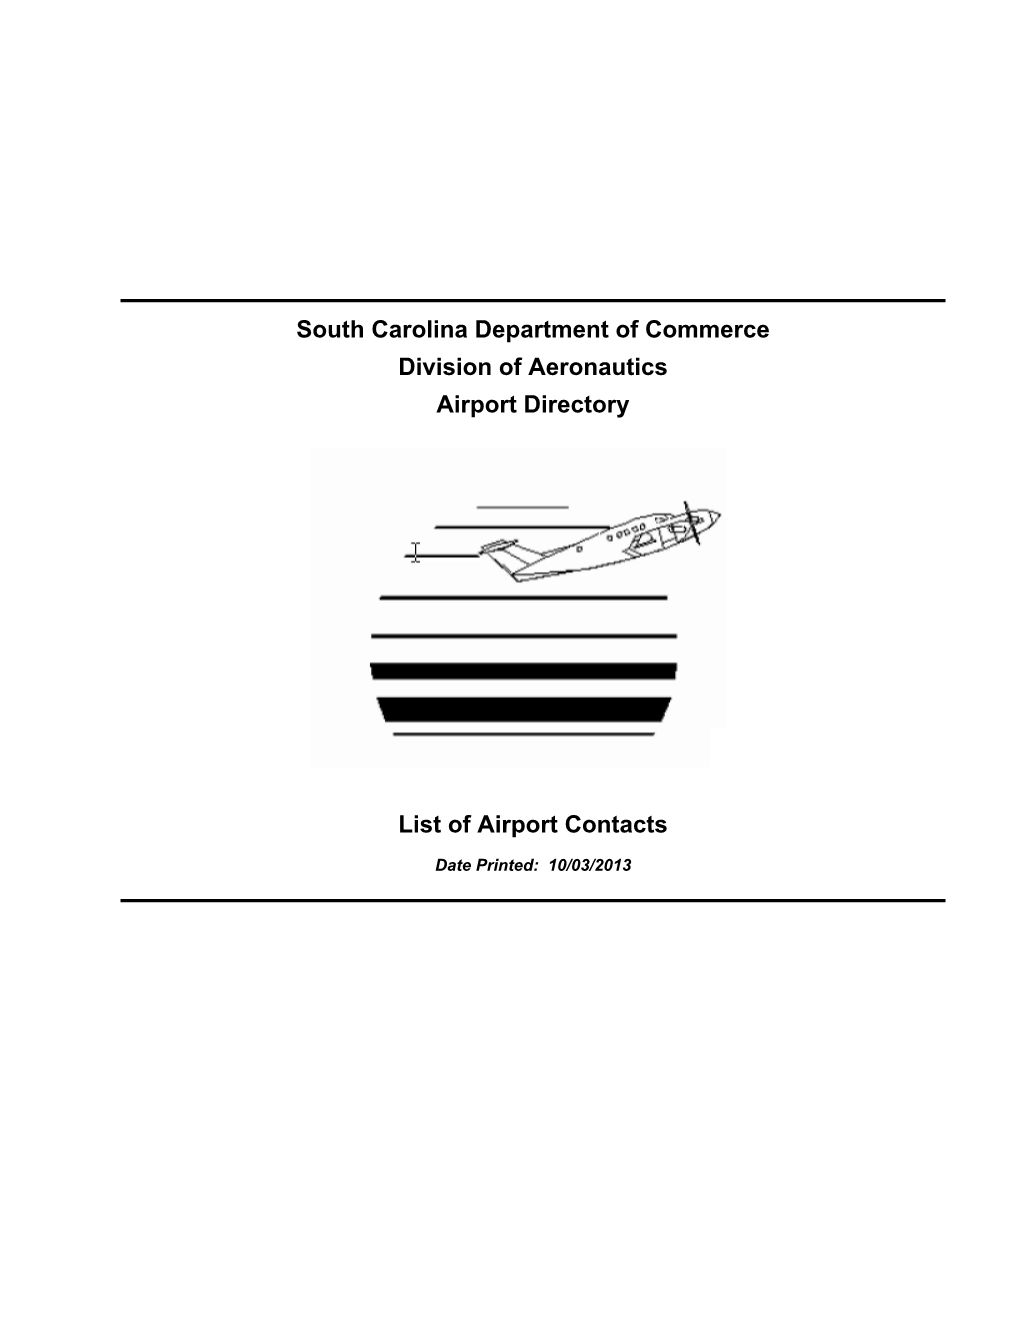 South Carolina Department of Commerce Division of Aeronautics Airport Directory